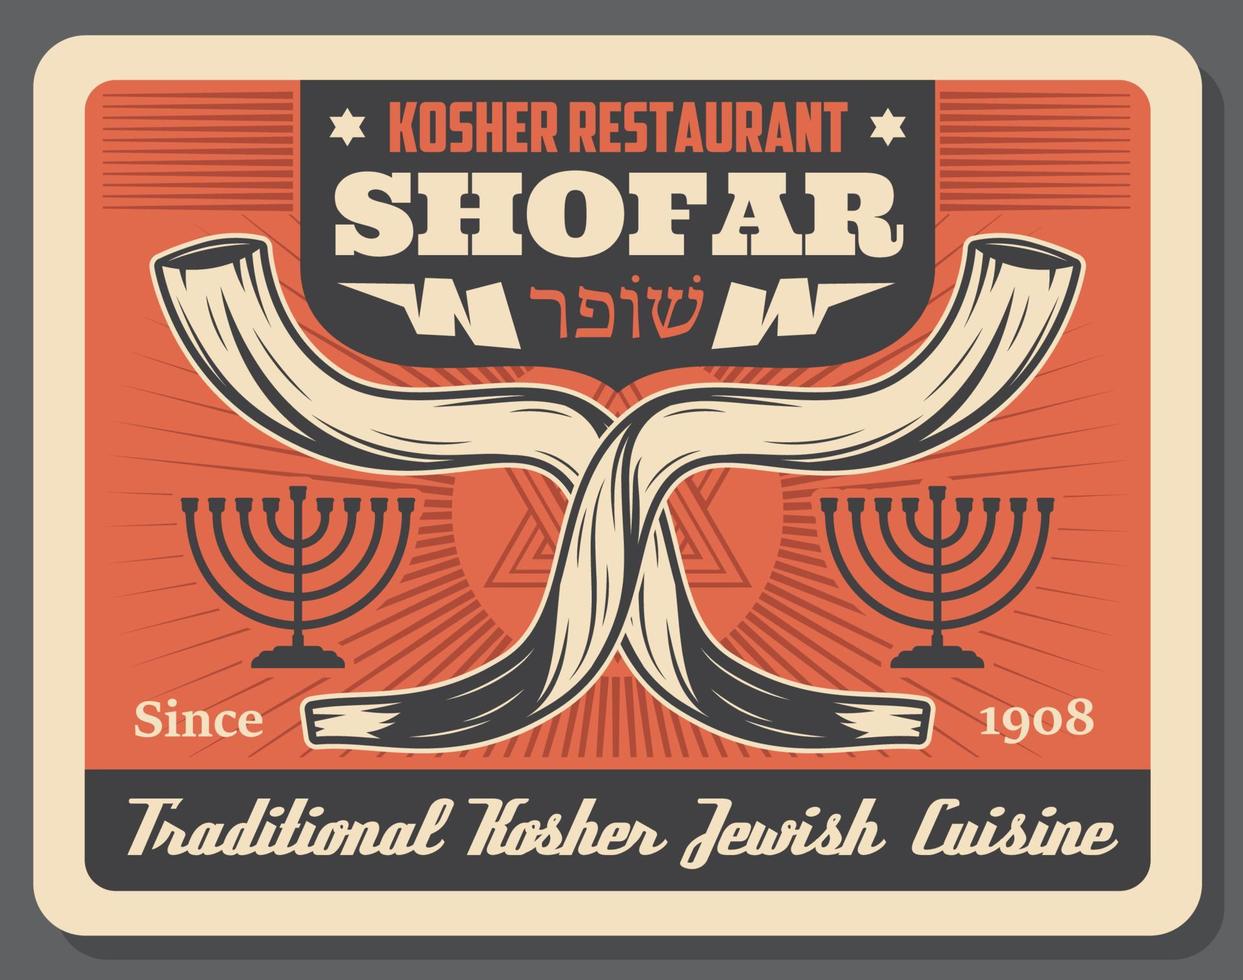 cartaz de restaurante kosher tradicional judeu vetor